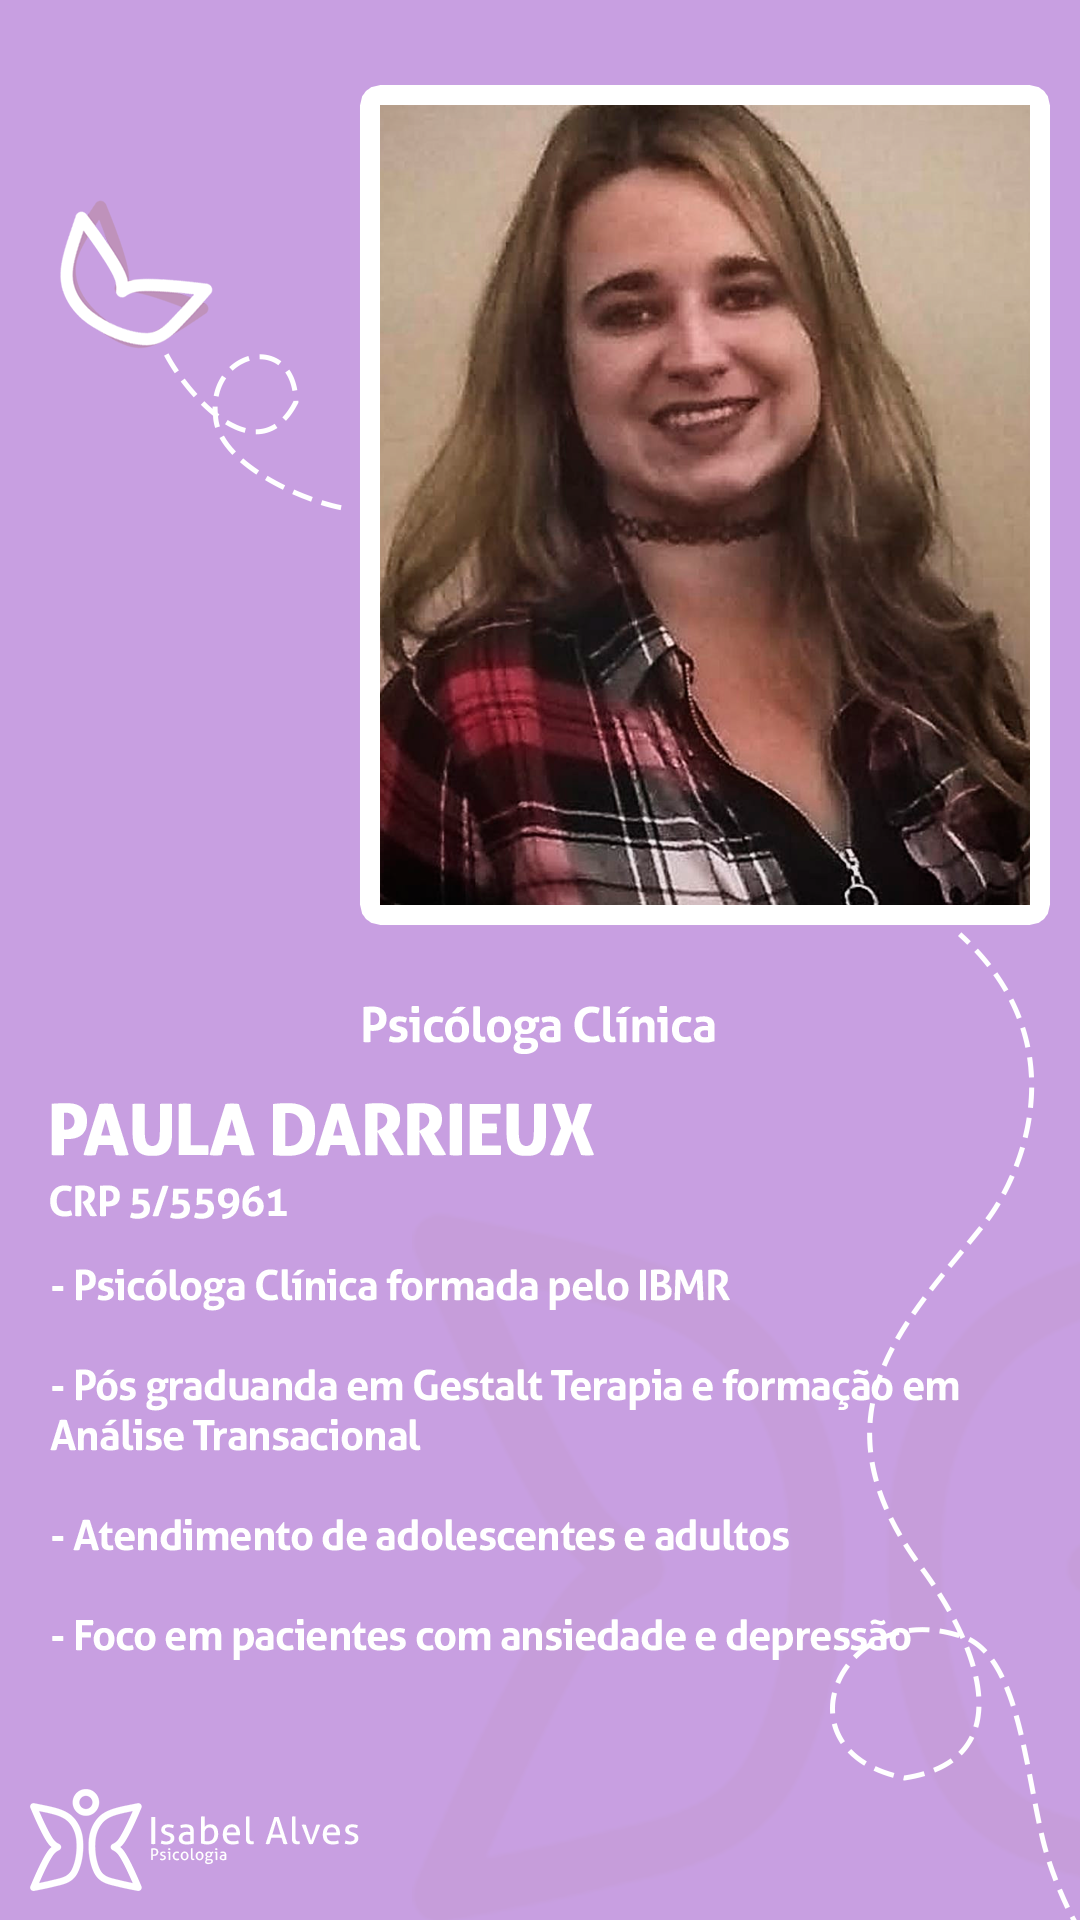 Paula Darrieux